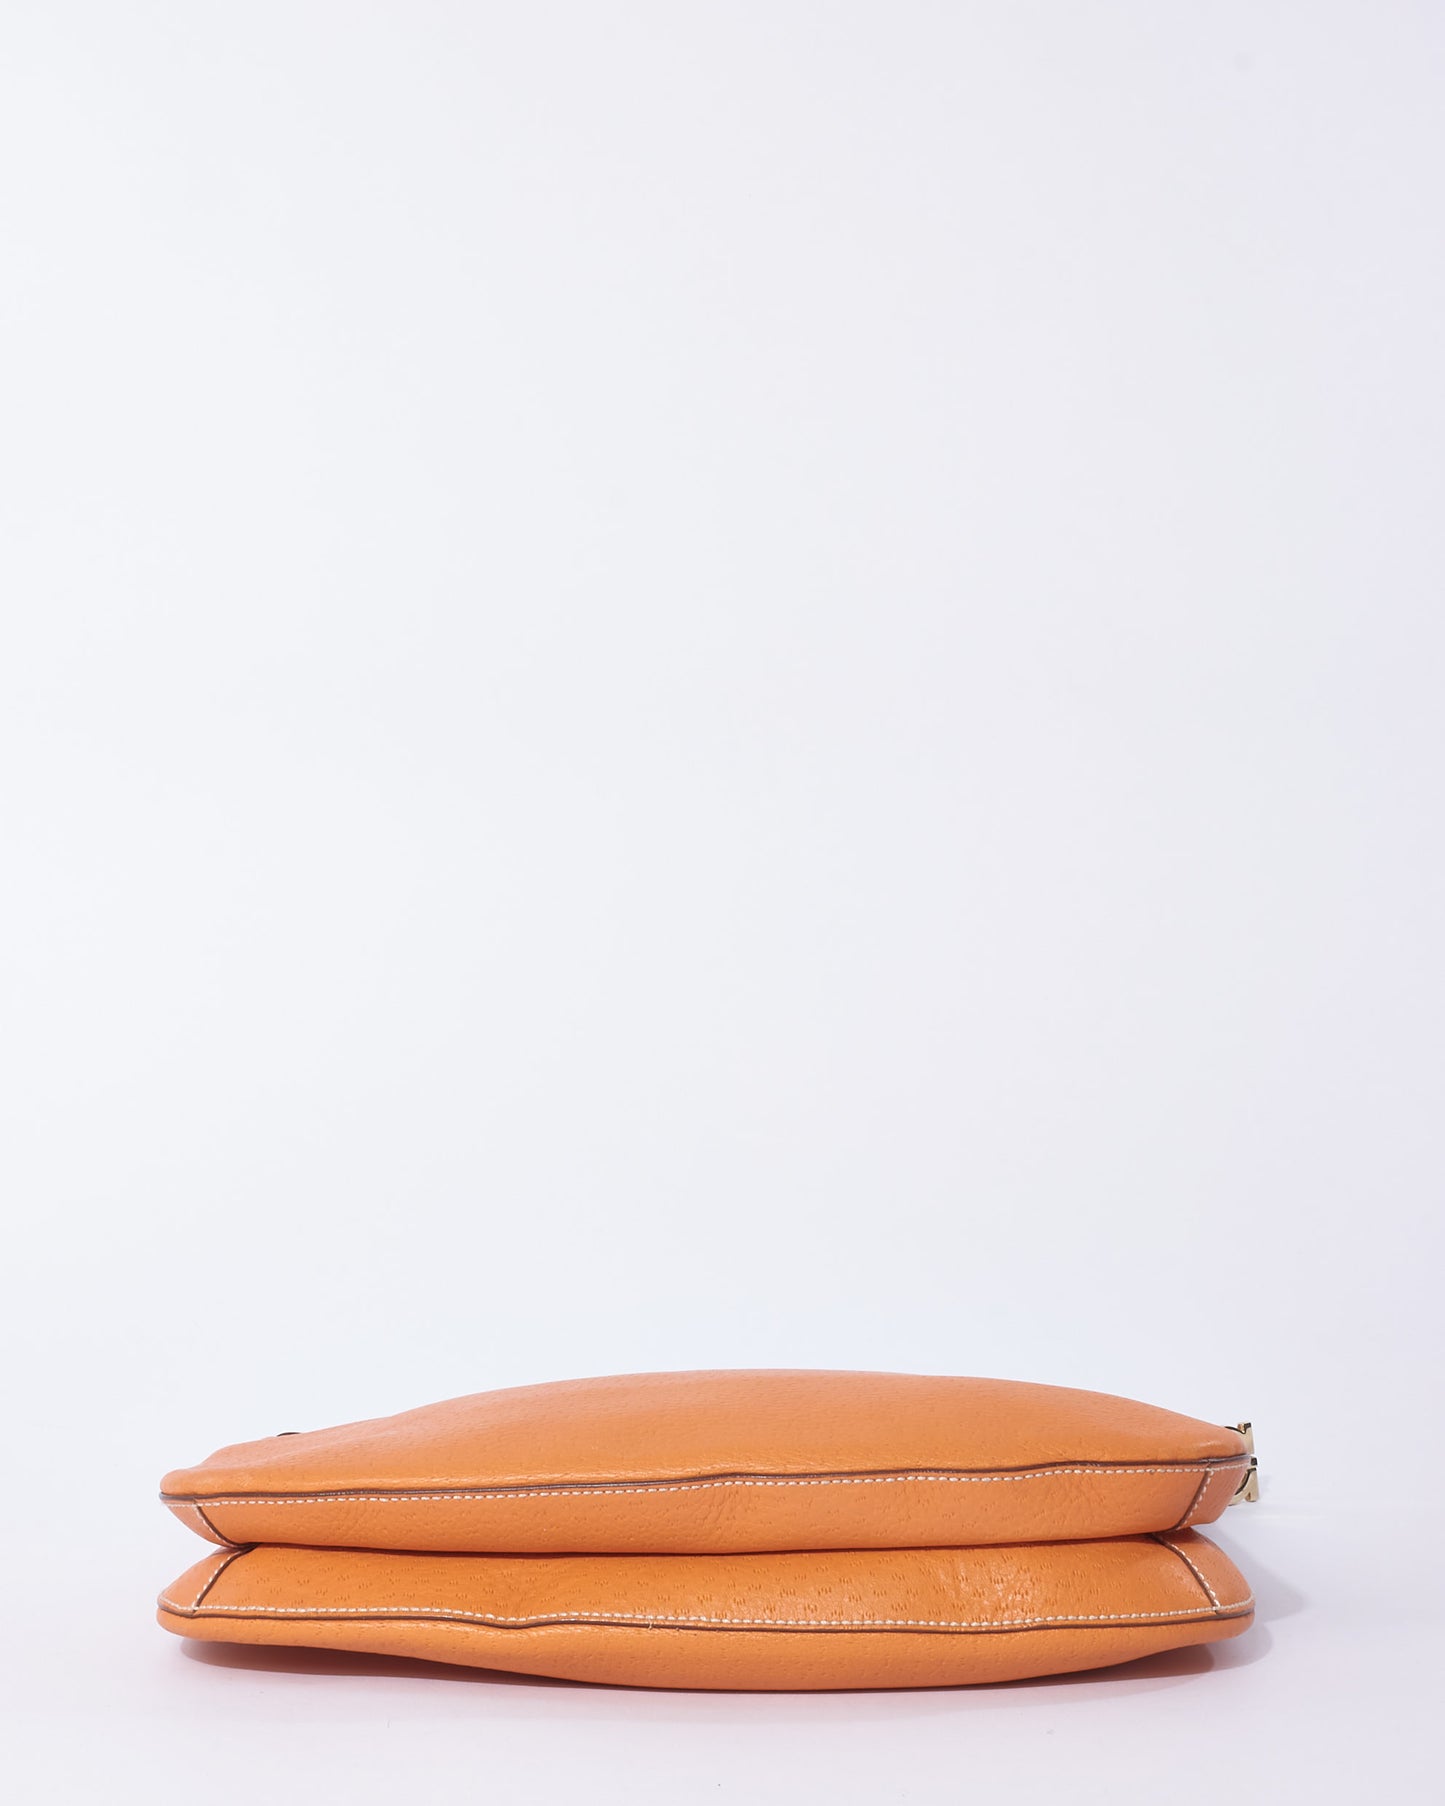 Salvatore Ferragamo Orange Leather Hobo Shoulder Bag